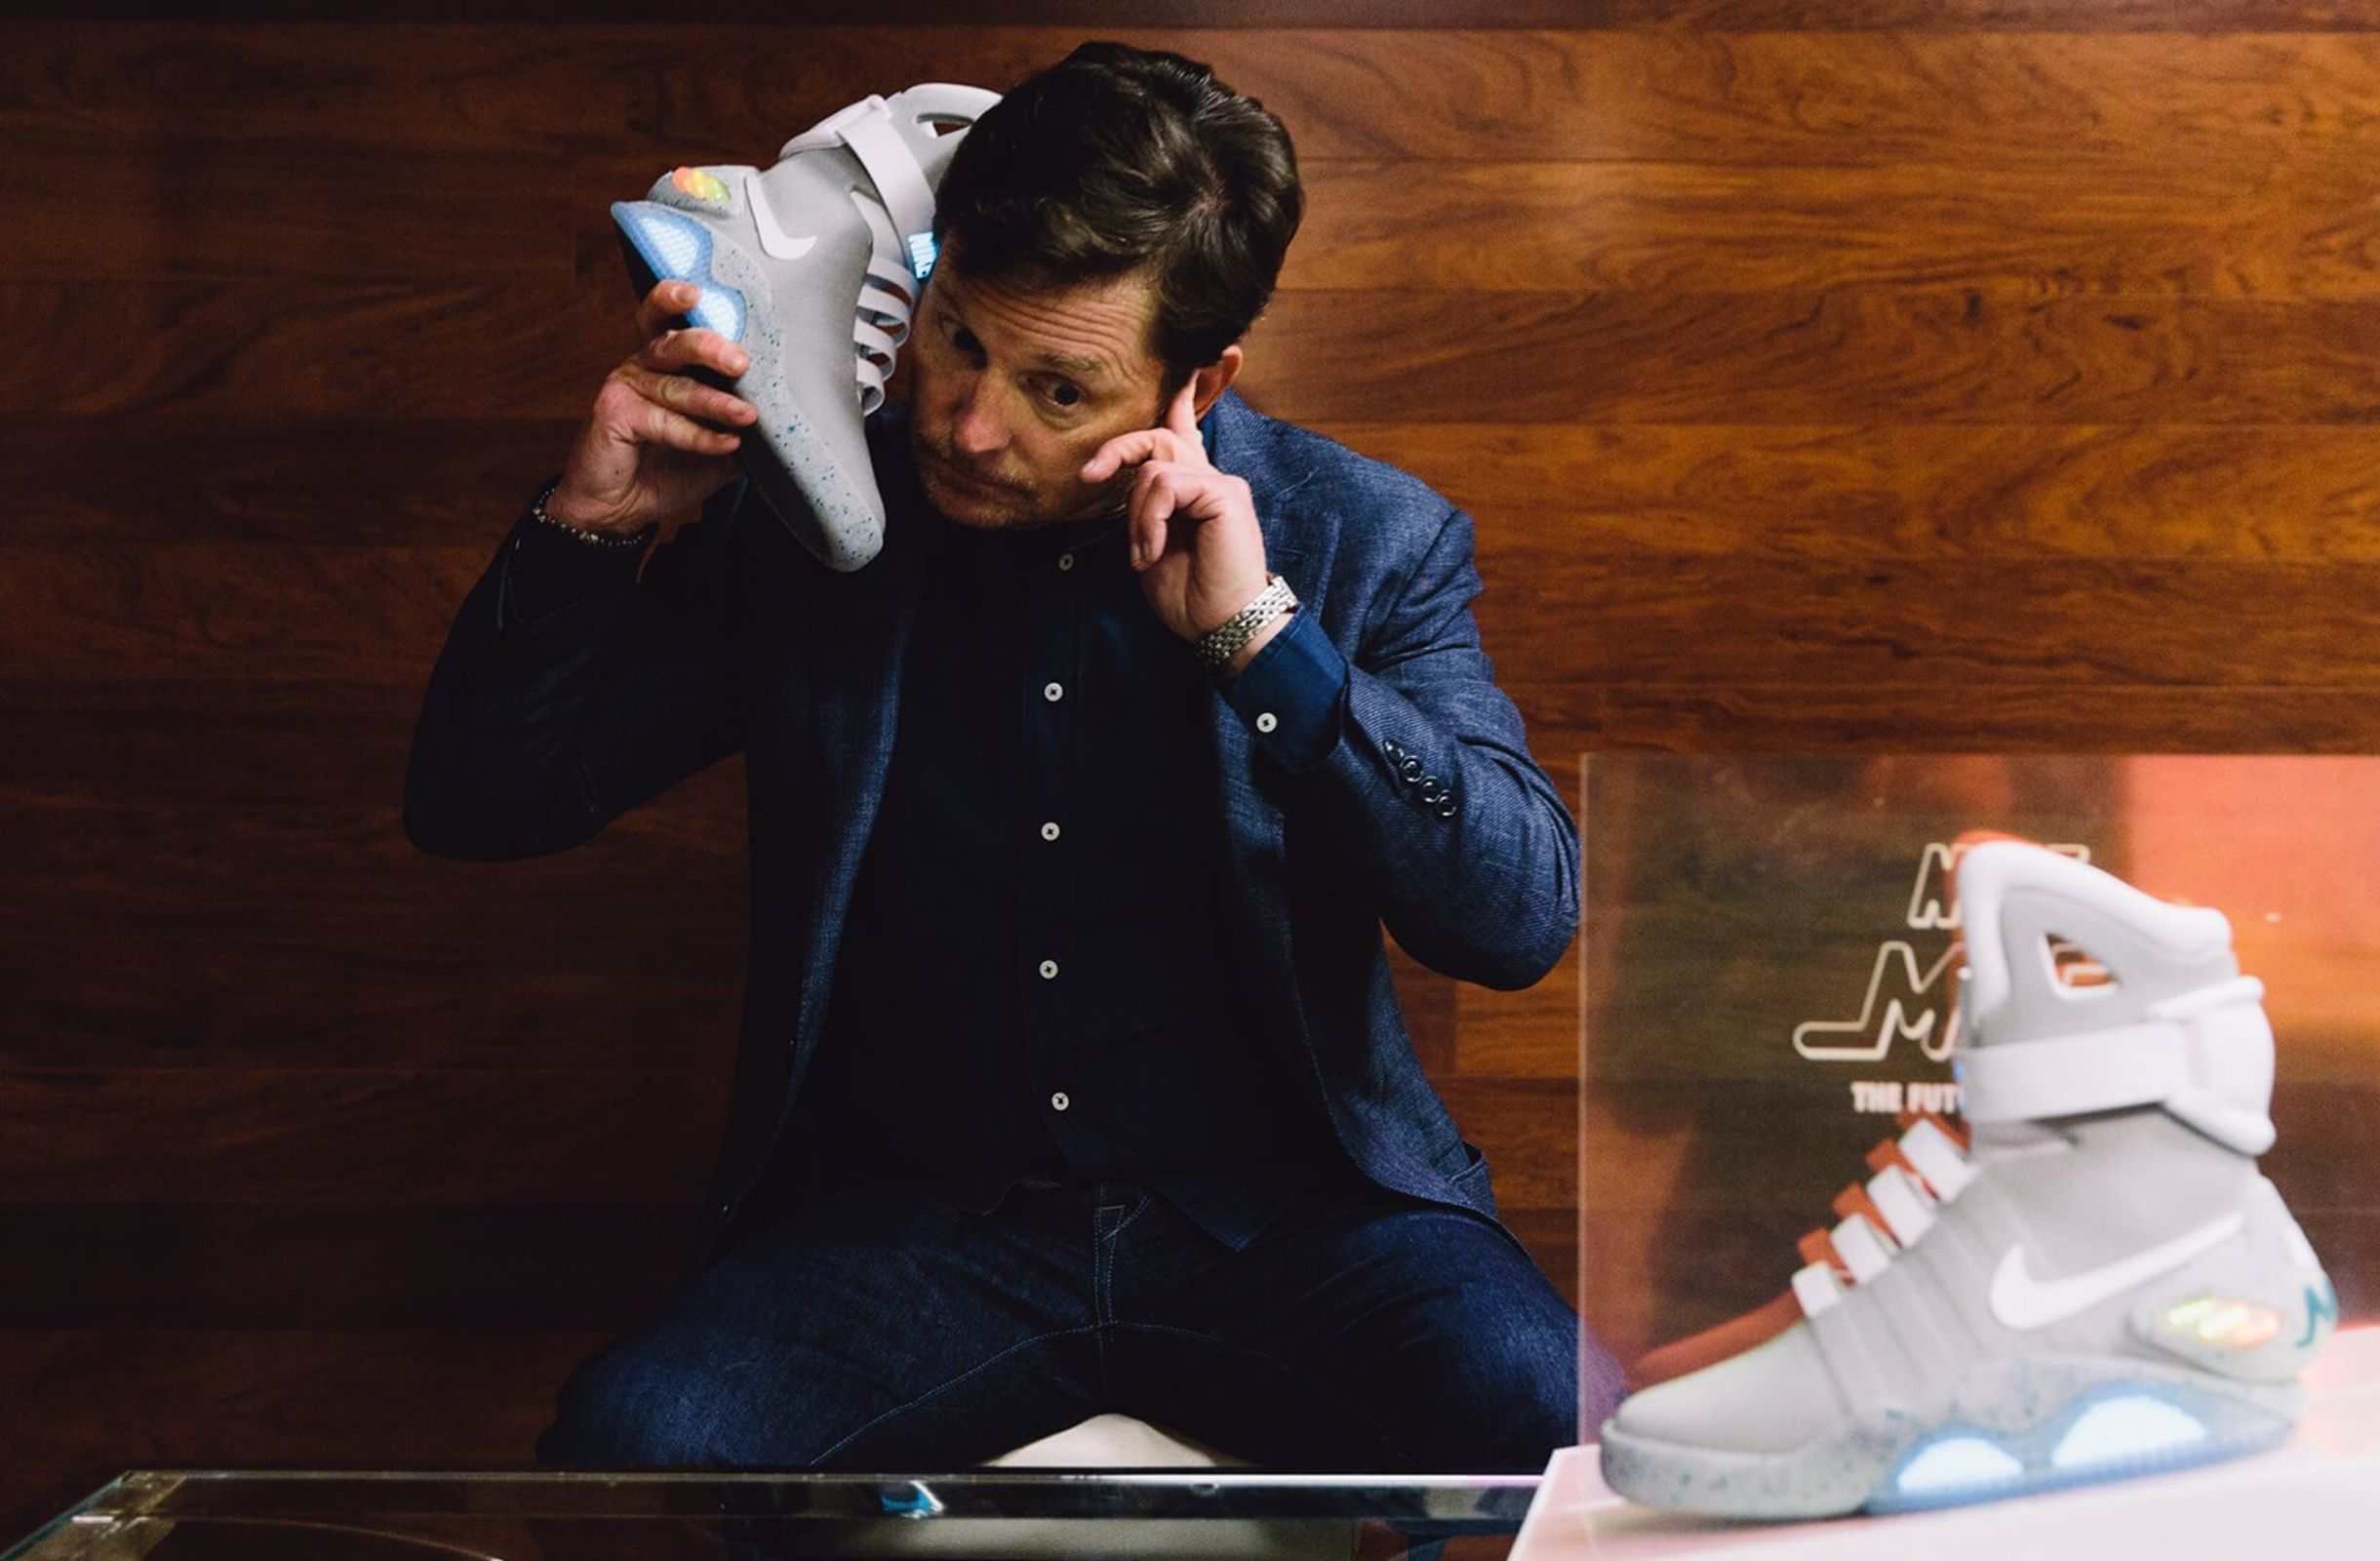 Michael J Fox holding Nike Mag to his ear like telephone